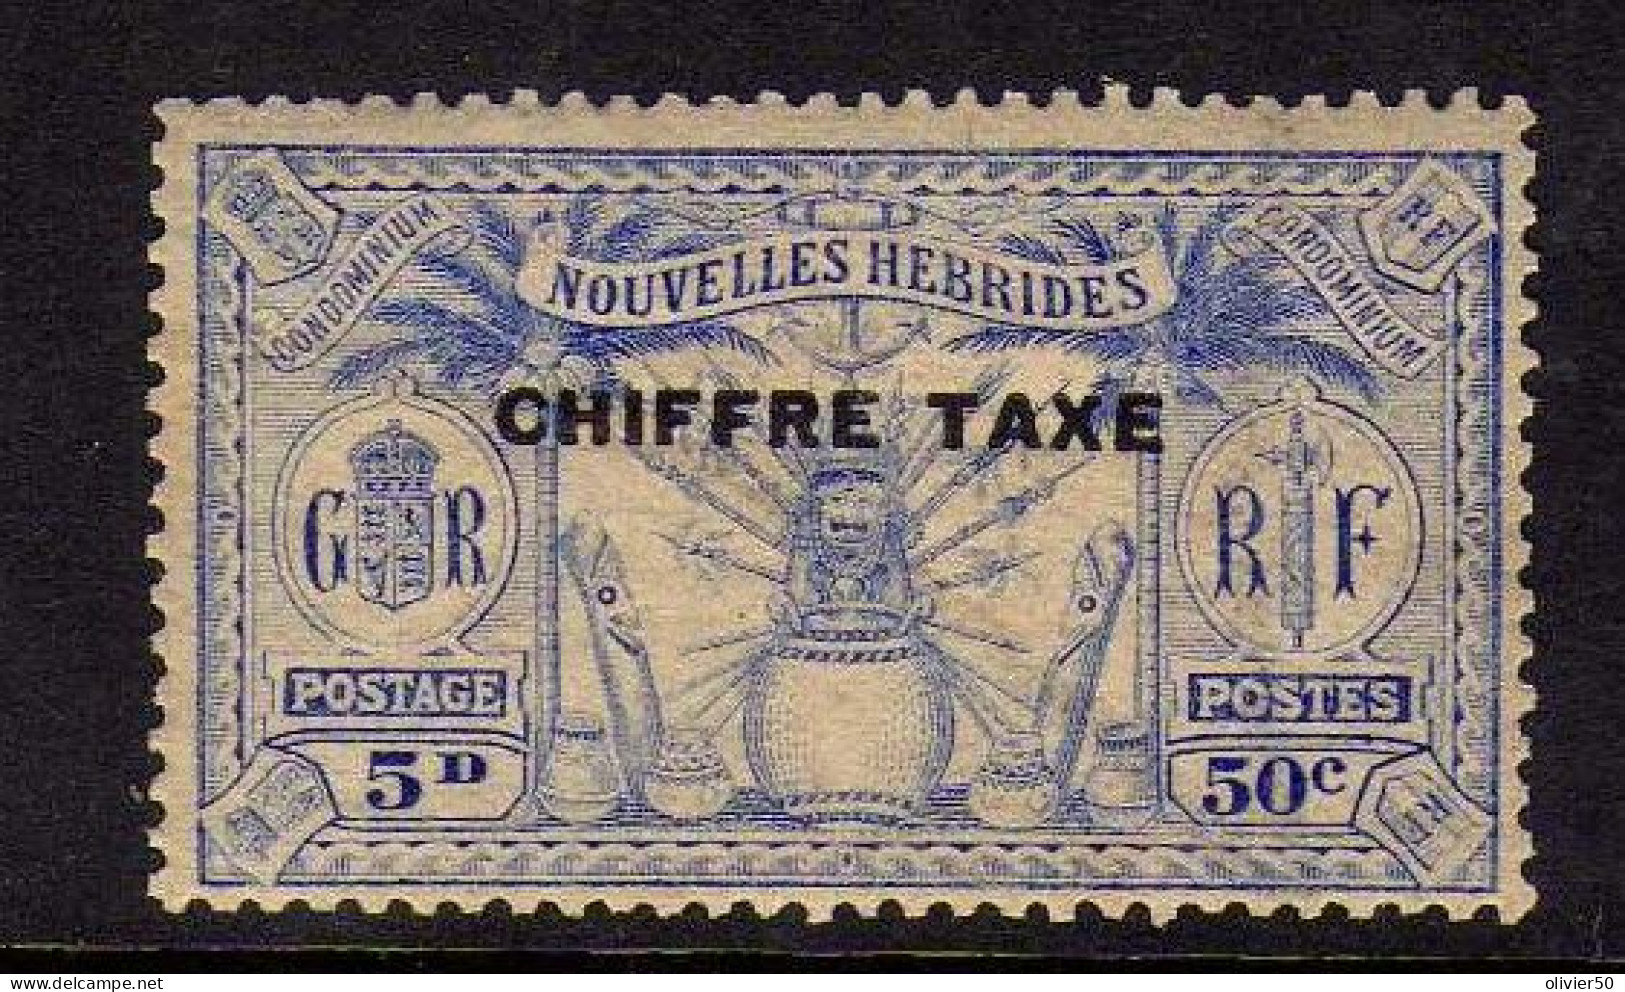 Nouvelles-Hebrides (1923) -  Timbre-Taxe  5 P. 50 C.   Neuf** - MNH - Impuestos